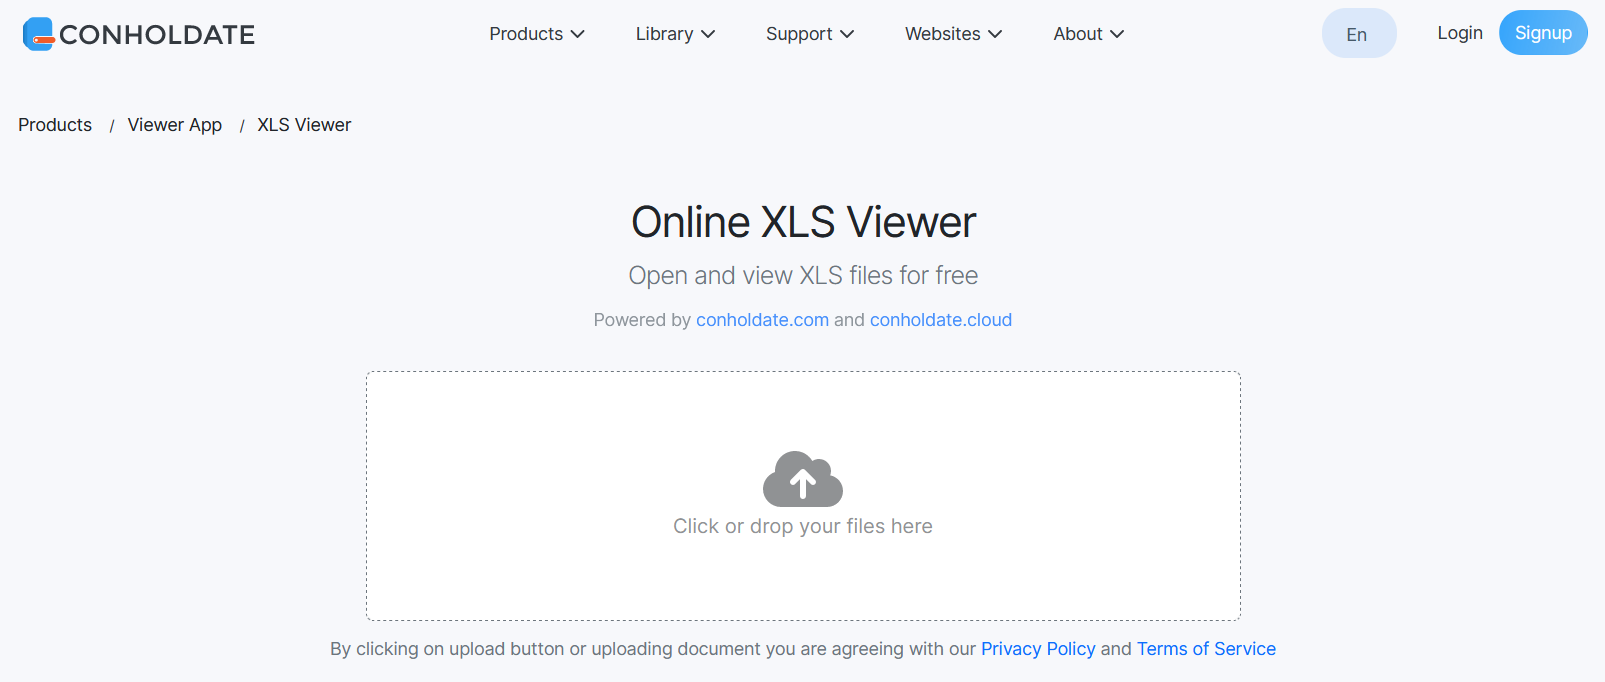 Conholdate Online XLS Viewer